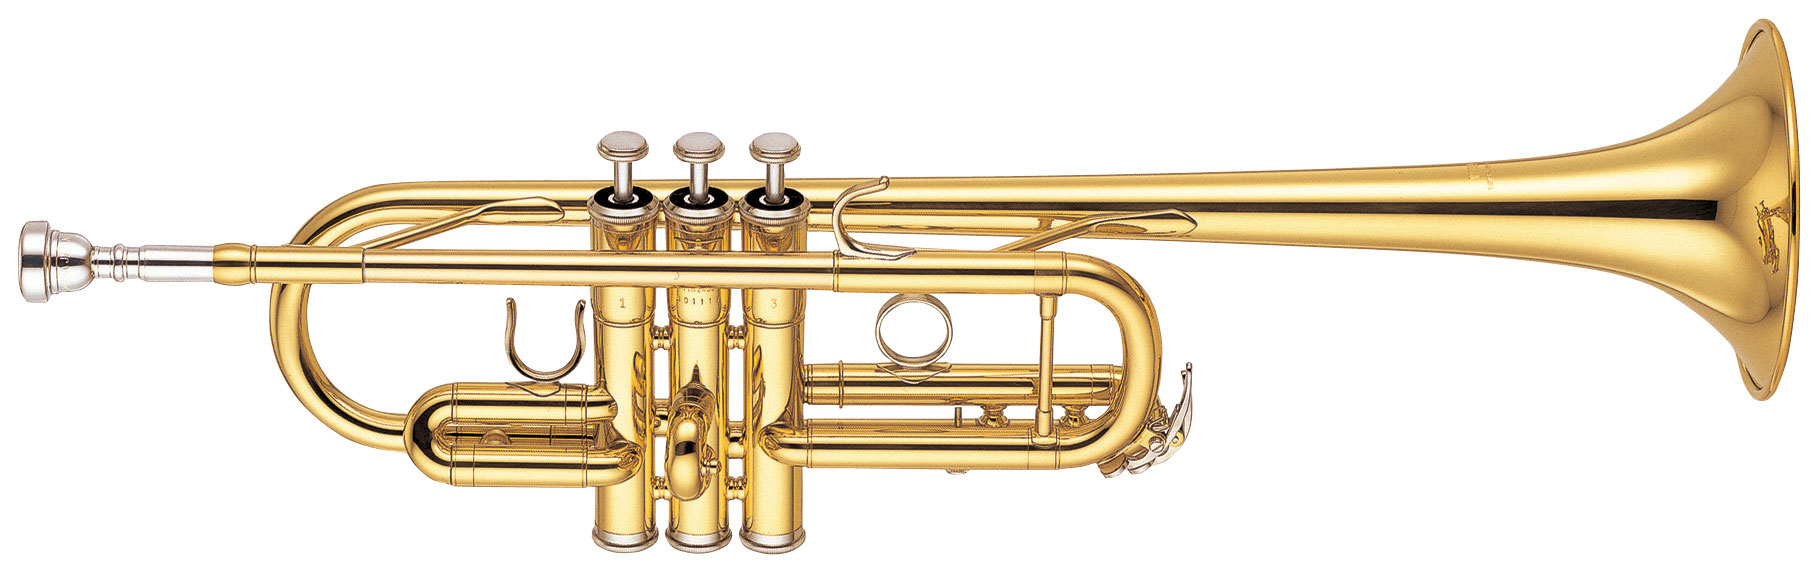 c trumpet.jpg